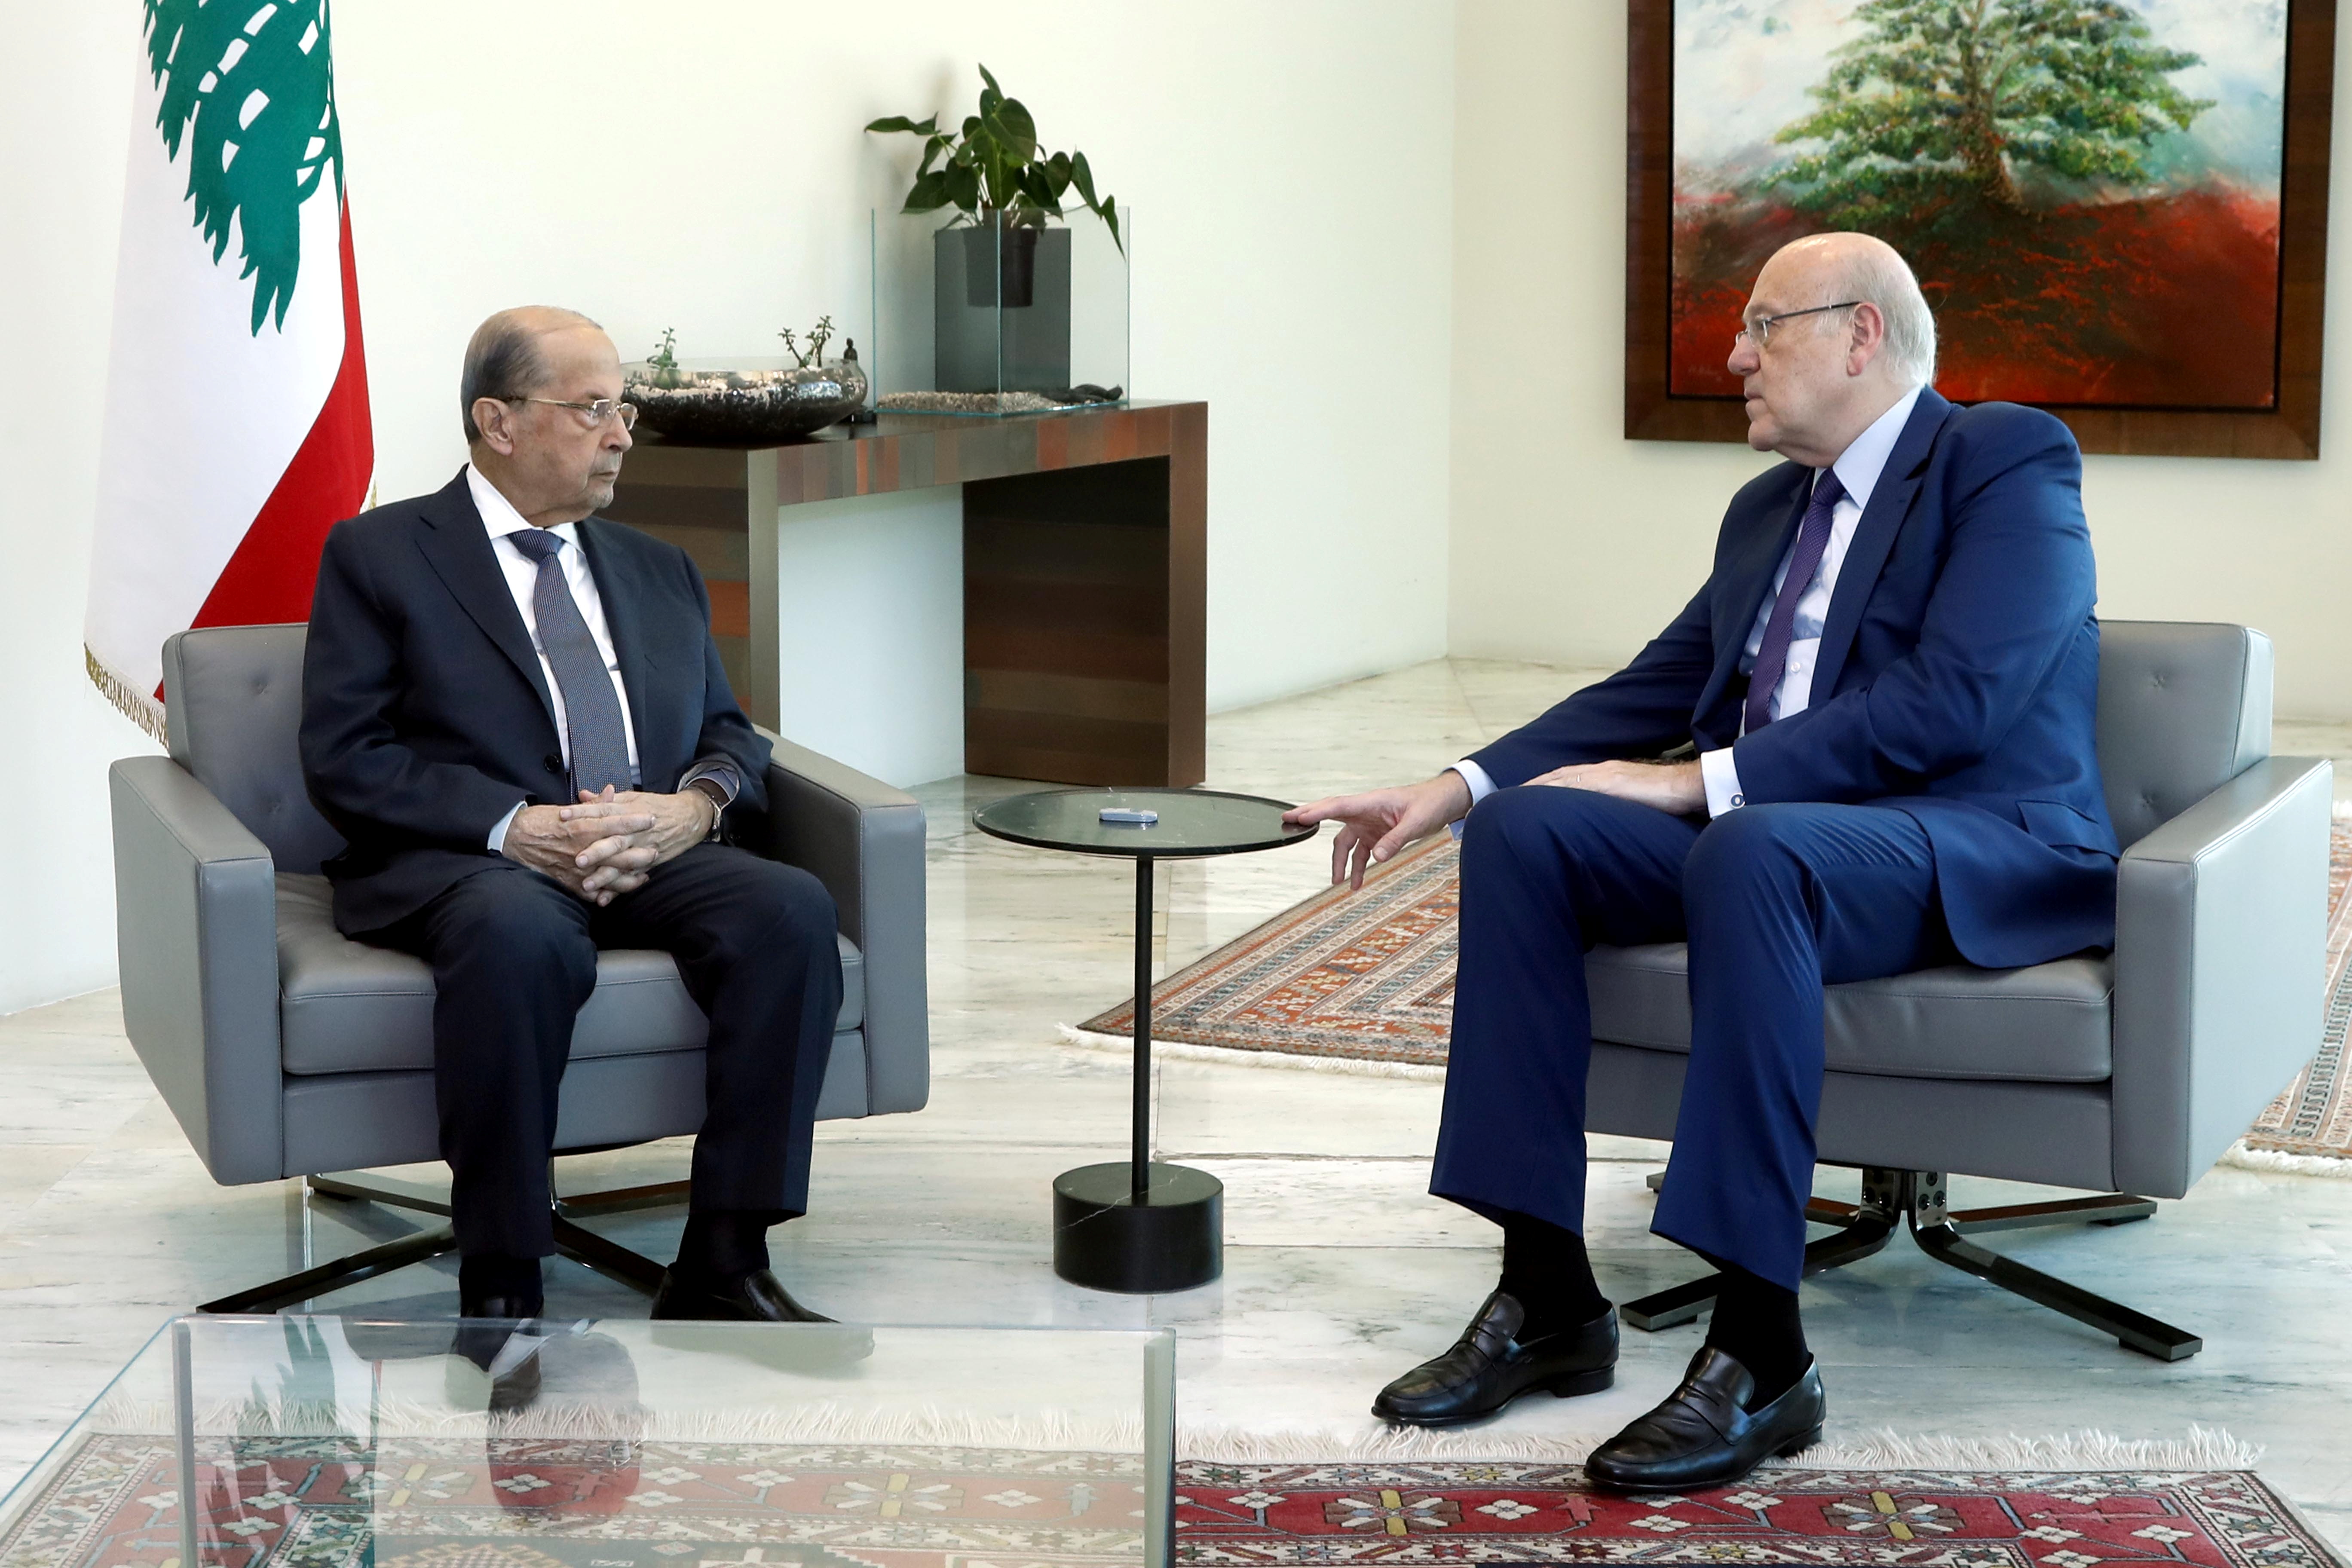 Lebanon's President Michel Aoun meets with Lebanese Prime Minister Najib Mikati at the presidential palace in Baabda